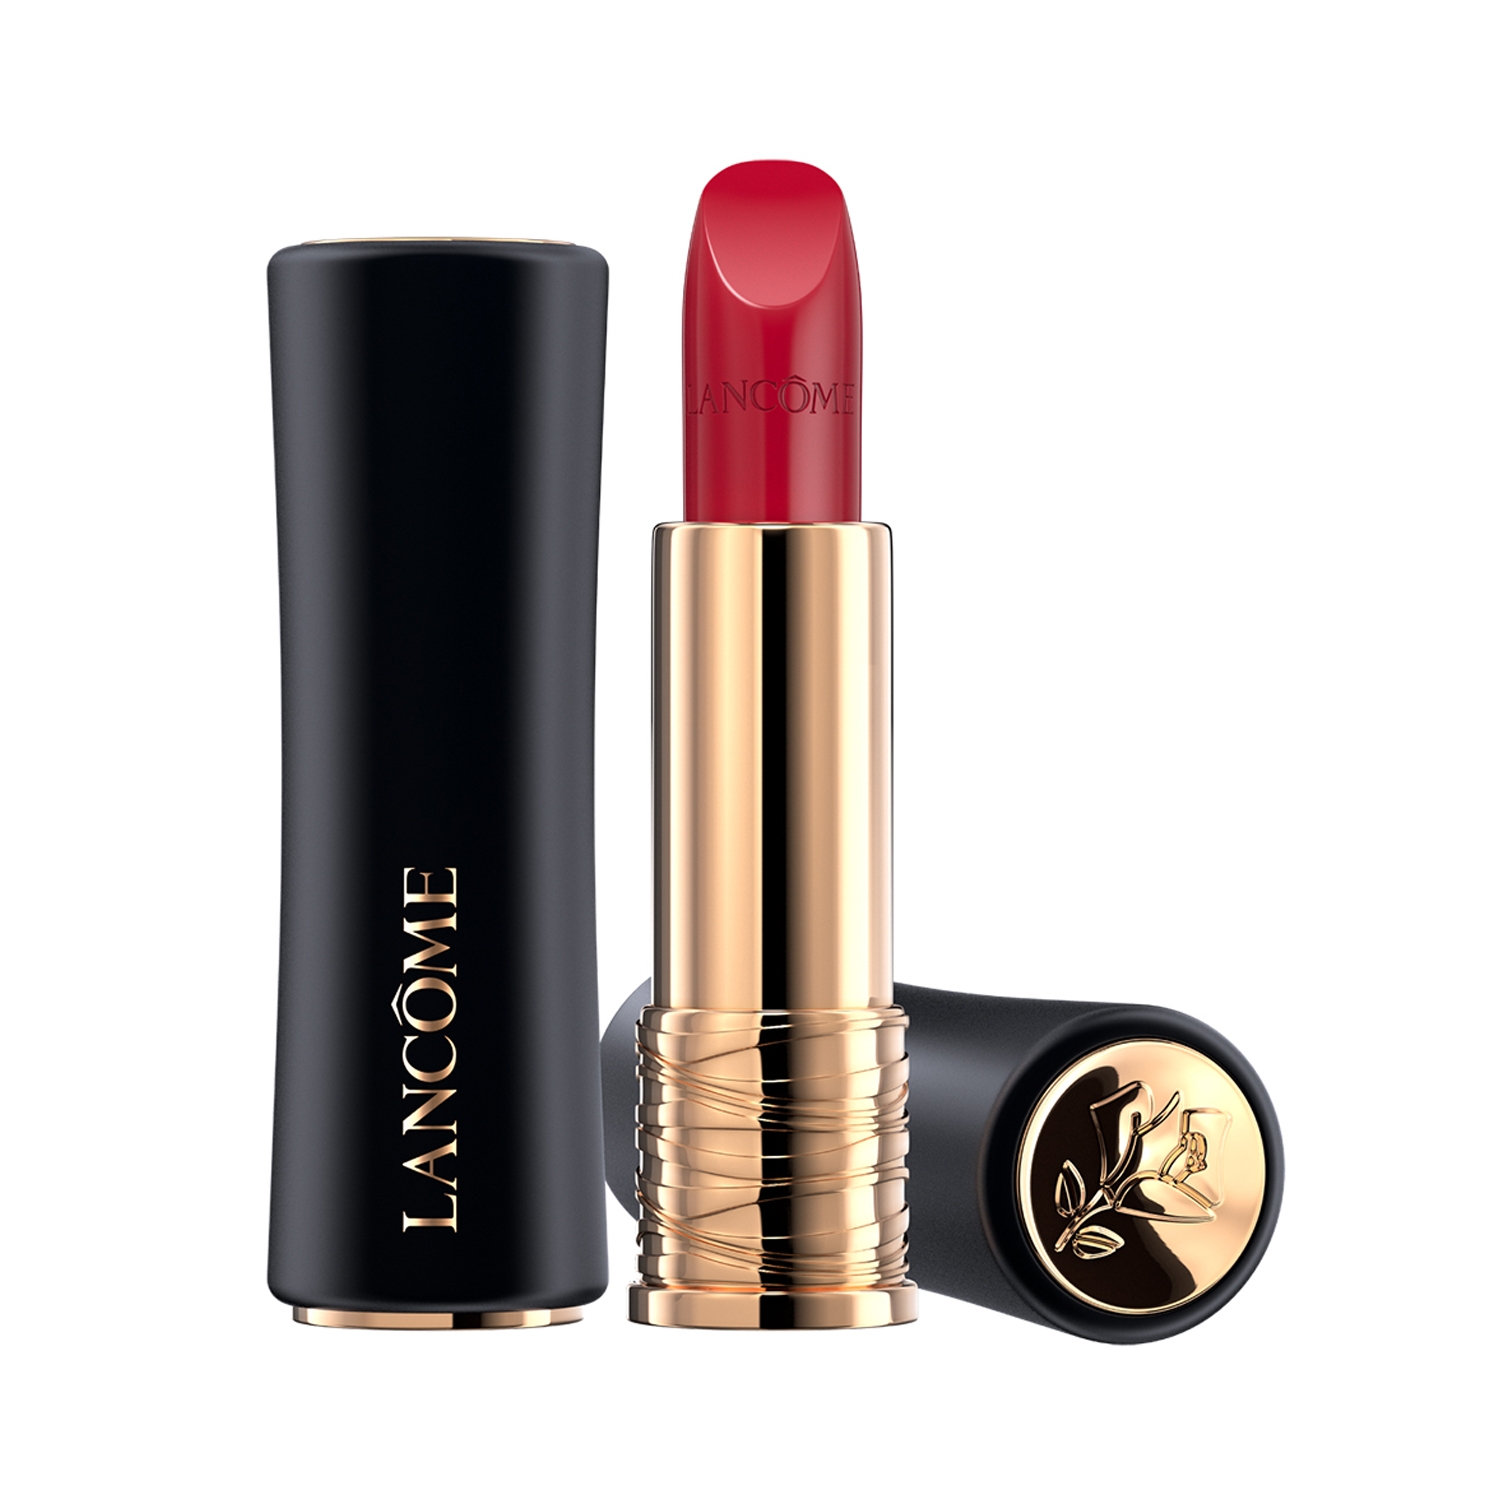 Lancome | Lancome L' Absolu Rouge Cream Lipstick - 368 Rose Lancome (3.4g)